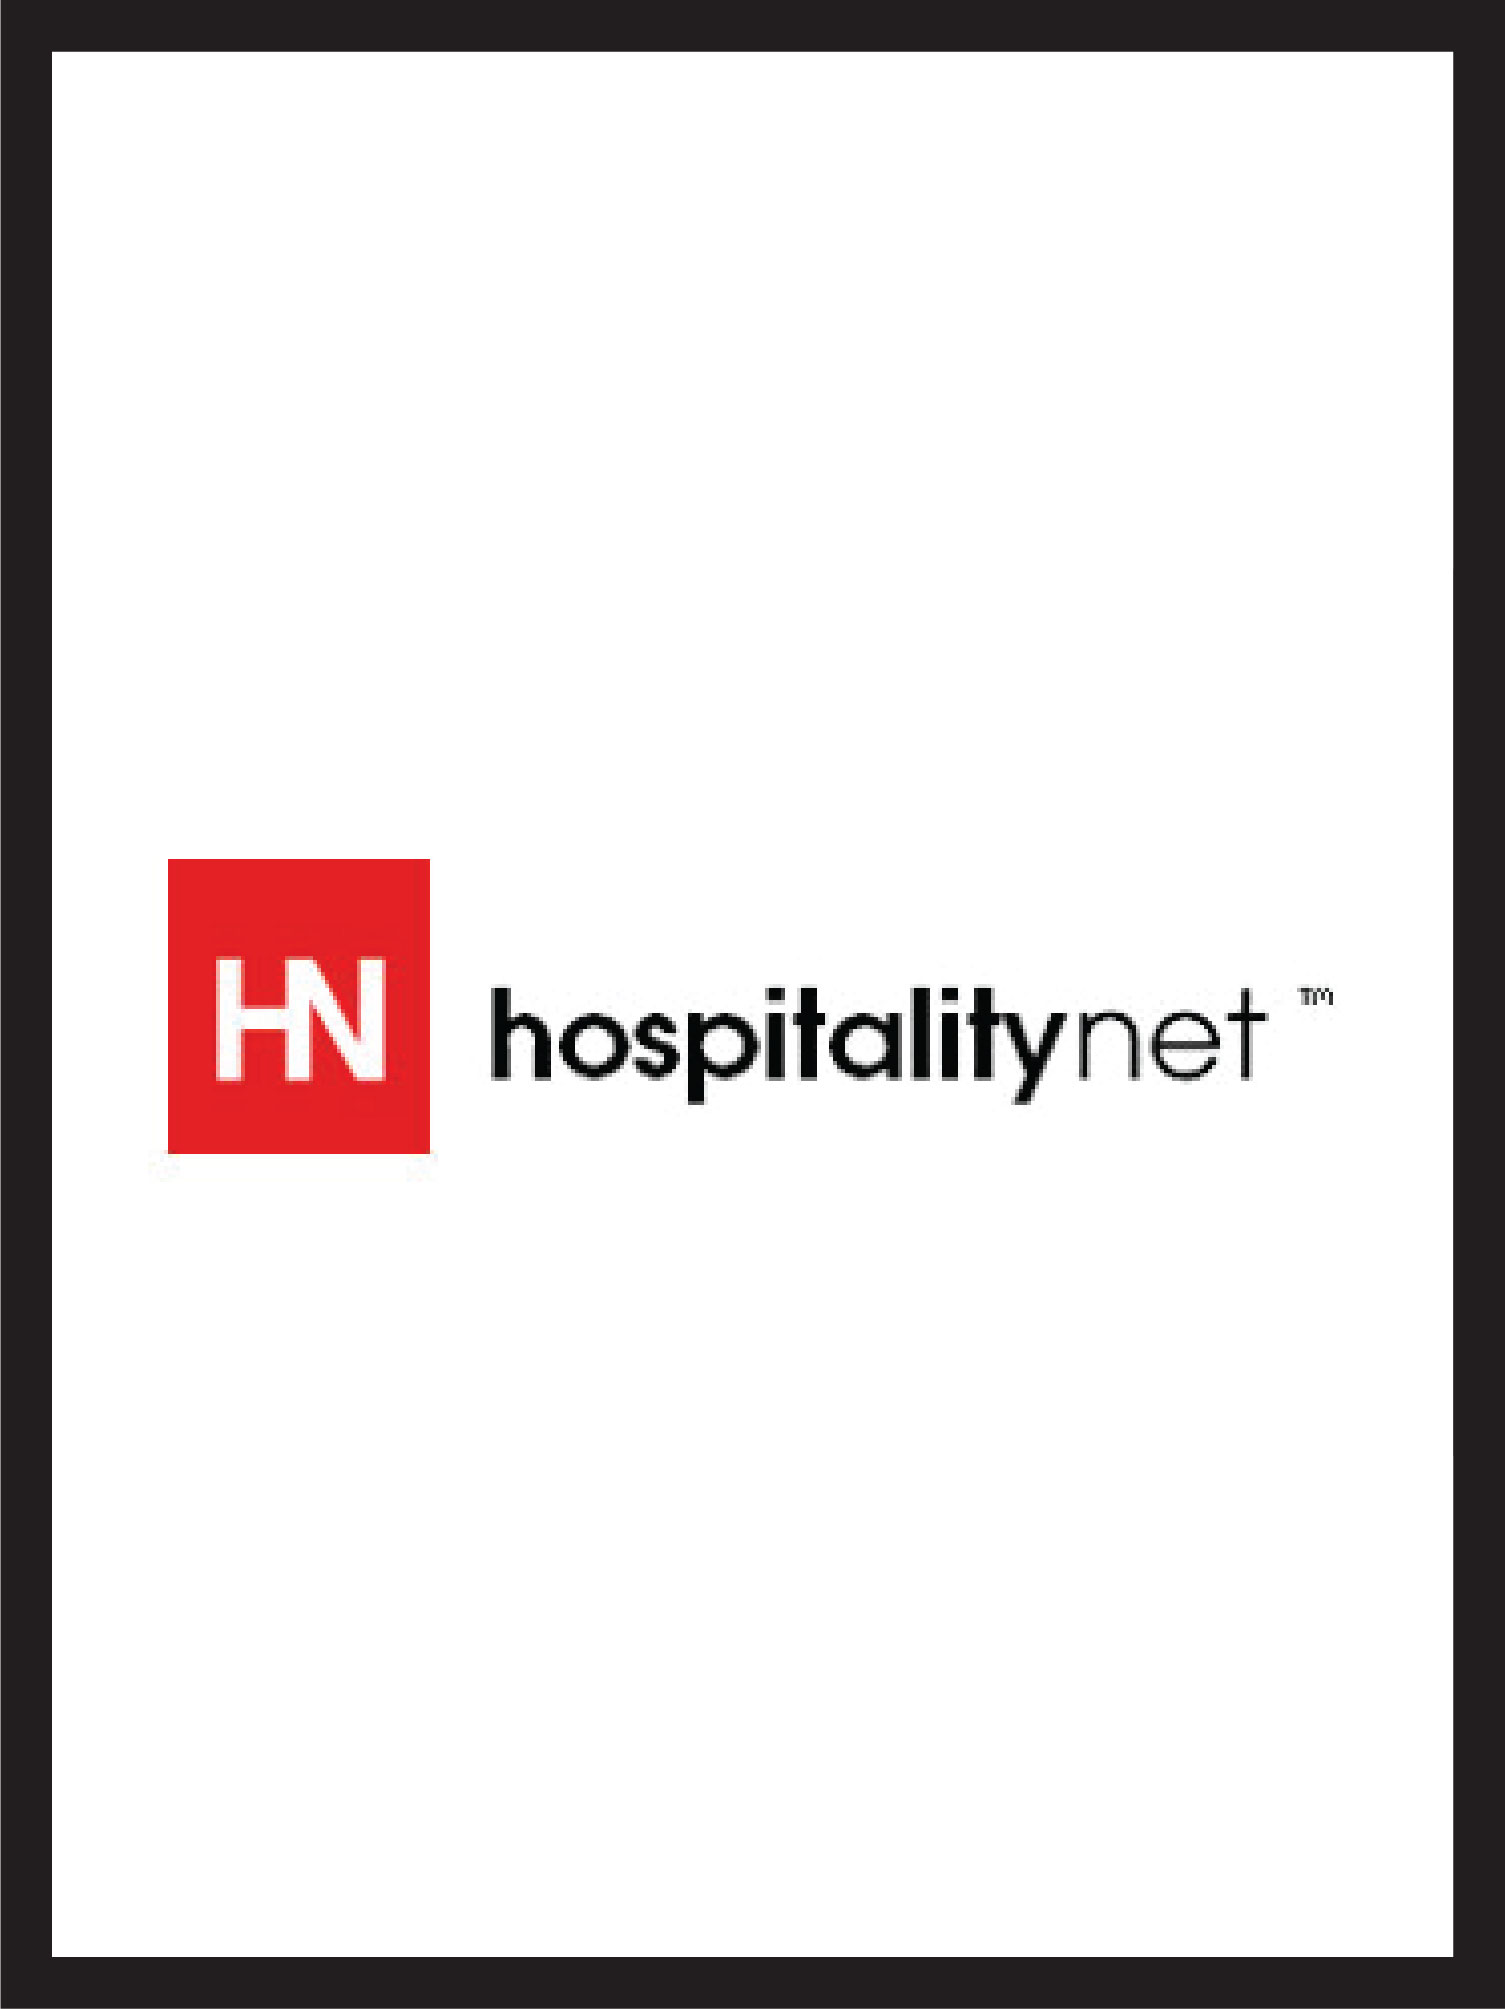 logo of the magazine hospitality net